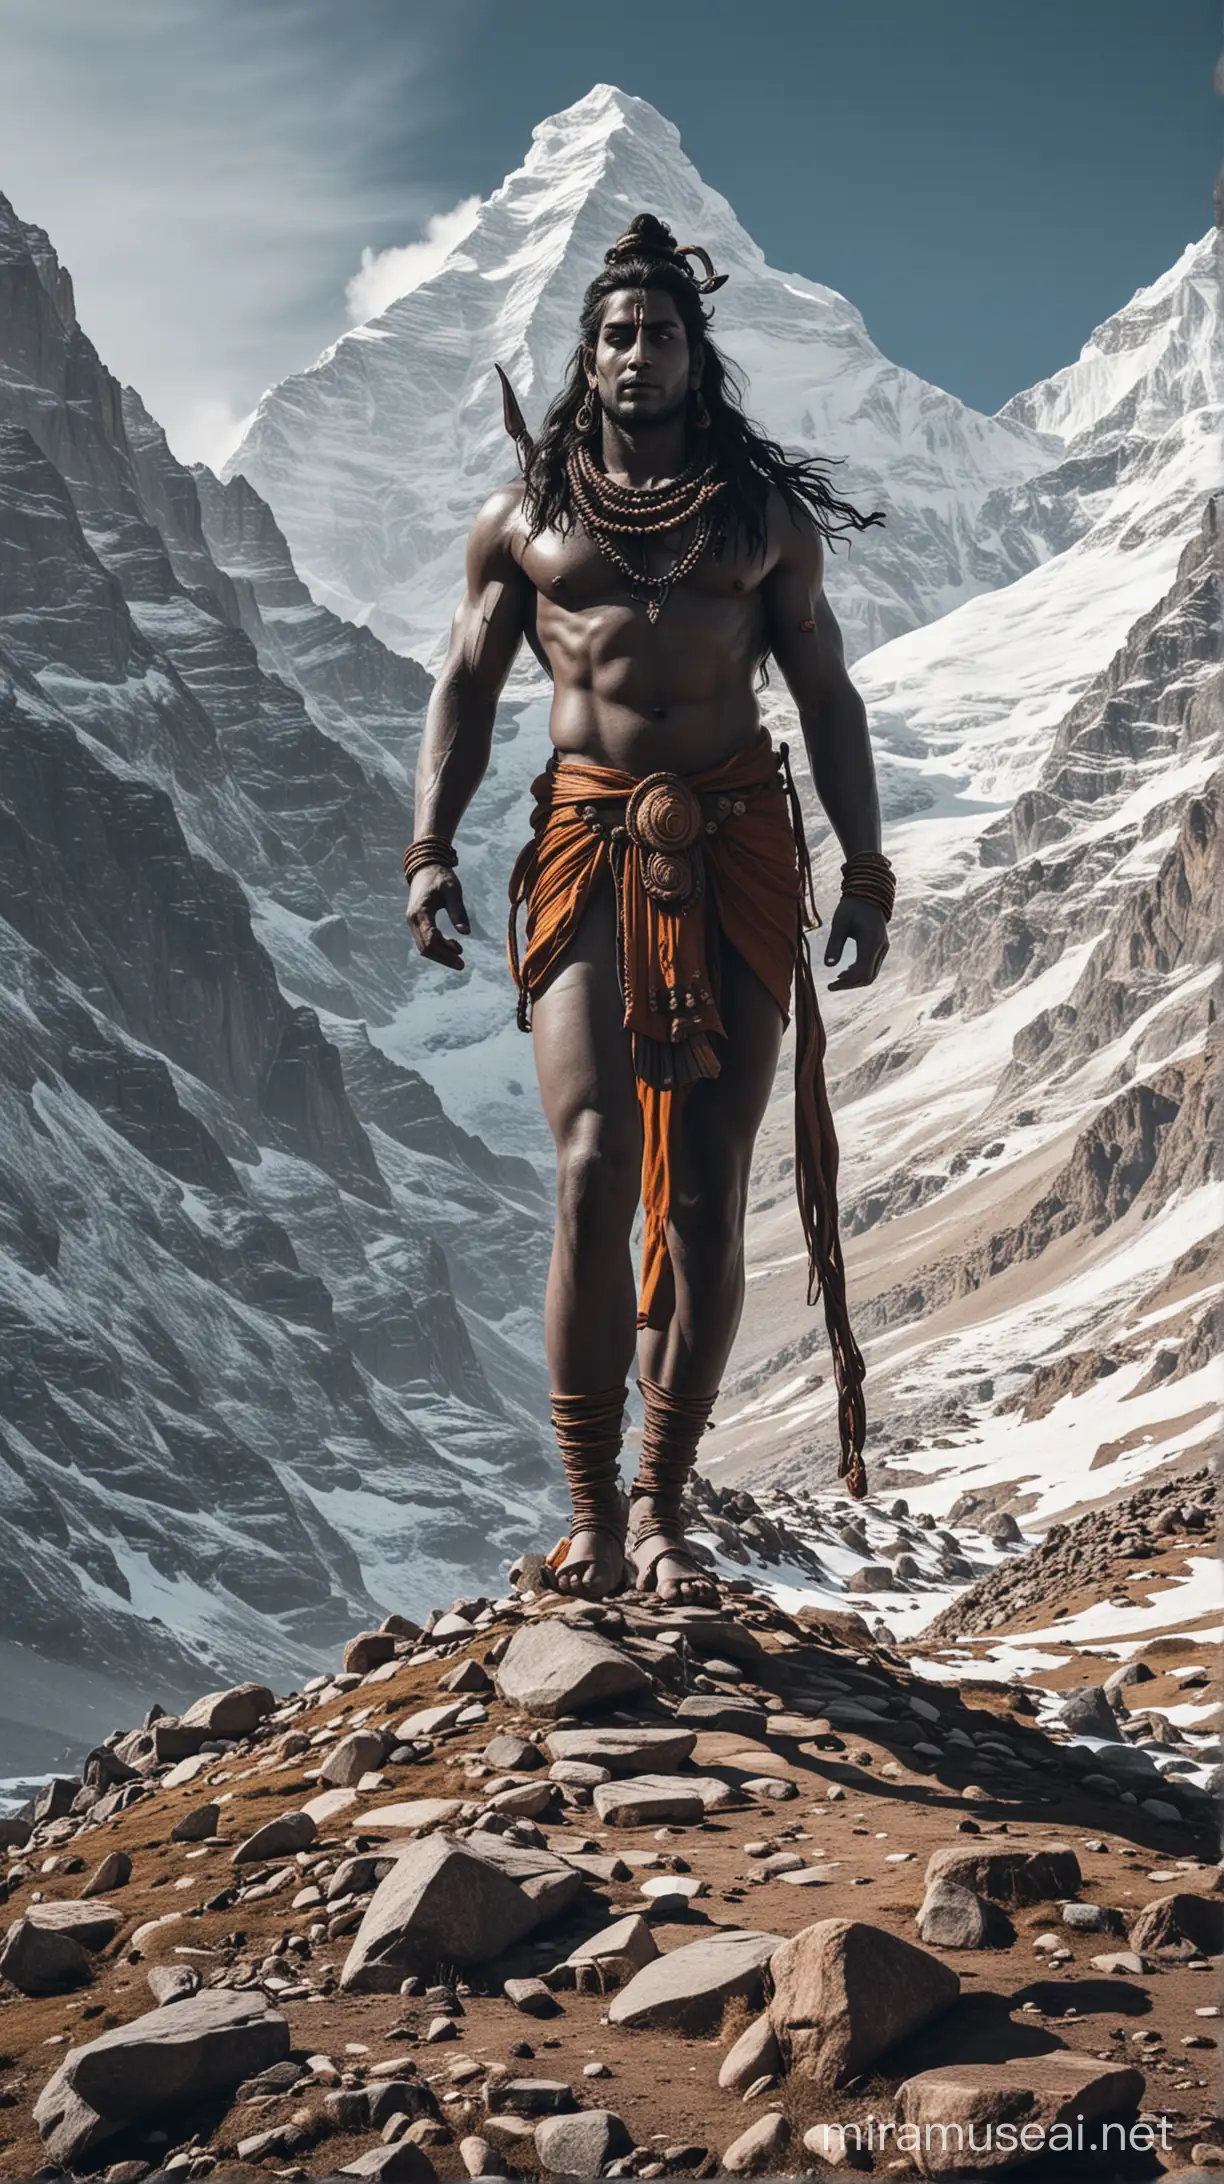 Majestic Lord Shiva Strolling at Mountain Base Camp